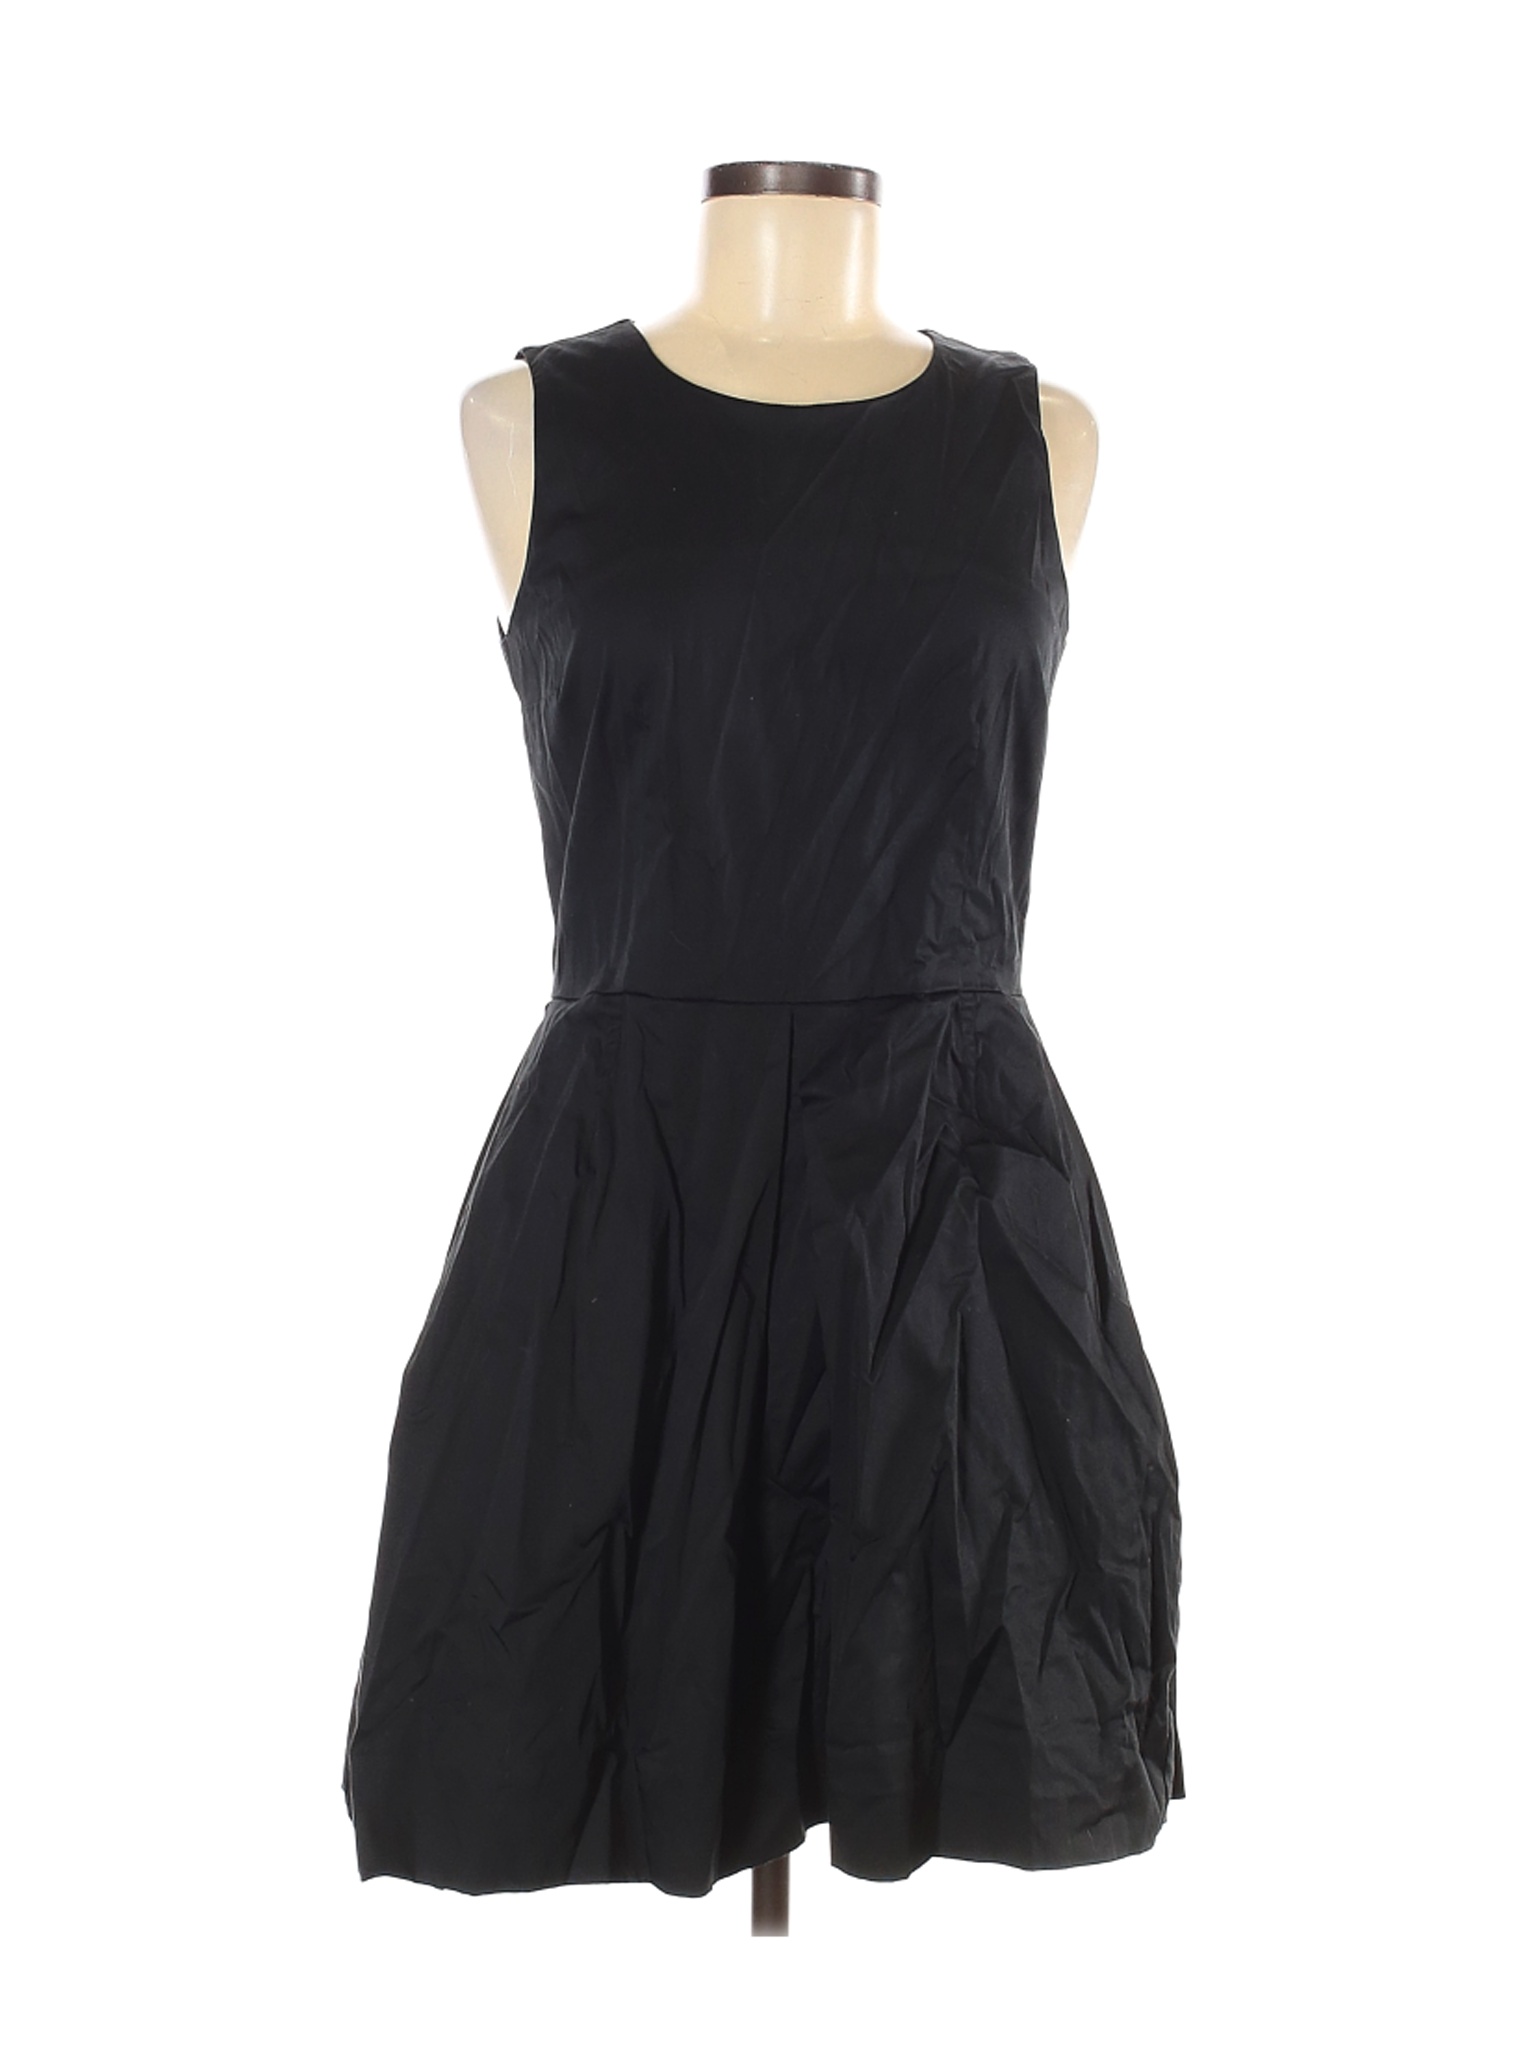 Gap Women Black Casual Dress 6 Petites | eBay